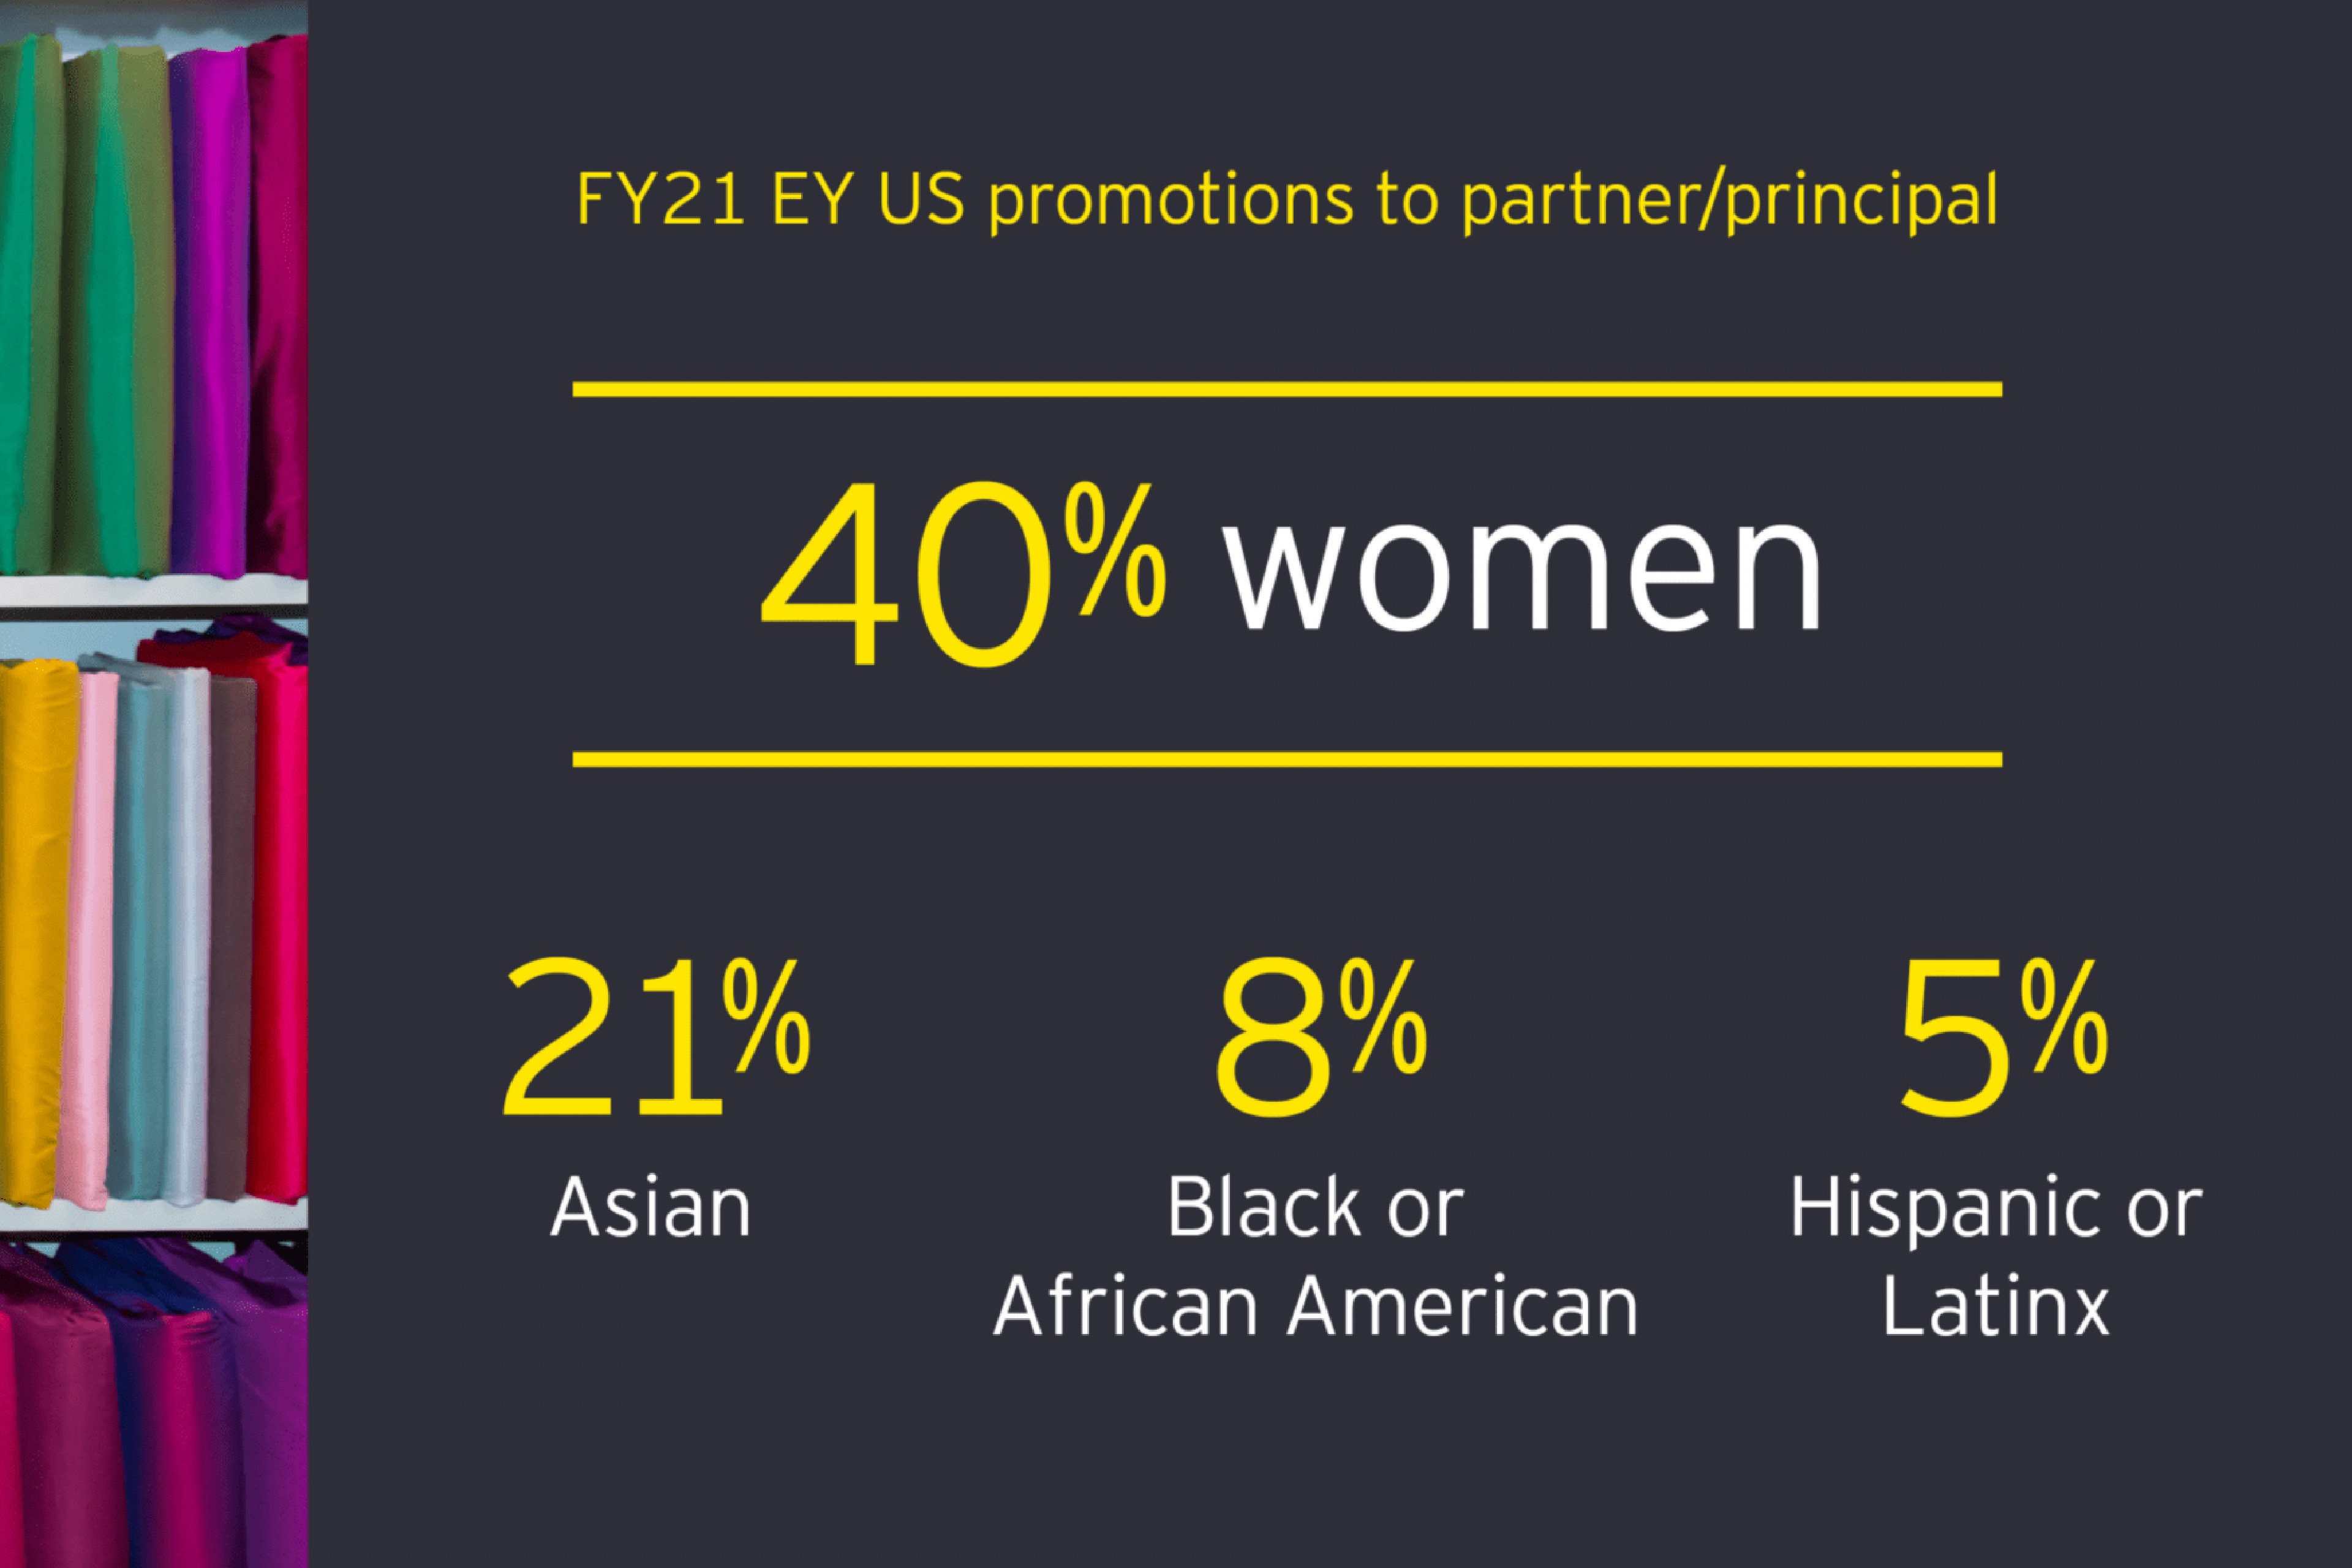 EY - 40% were women, 21% were Asian, 8% were Black or African American; 5% were Hispanic or Latinx.